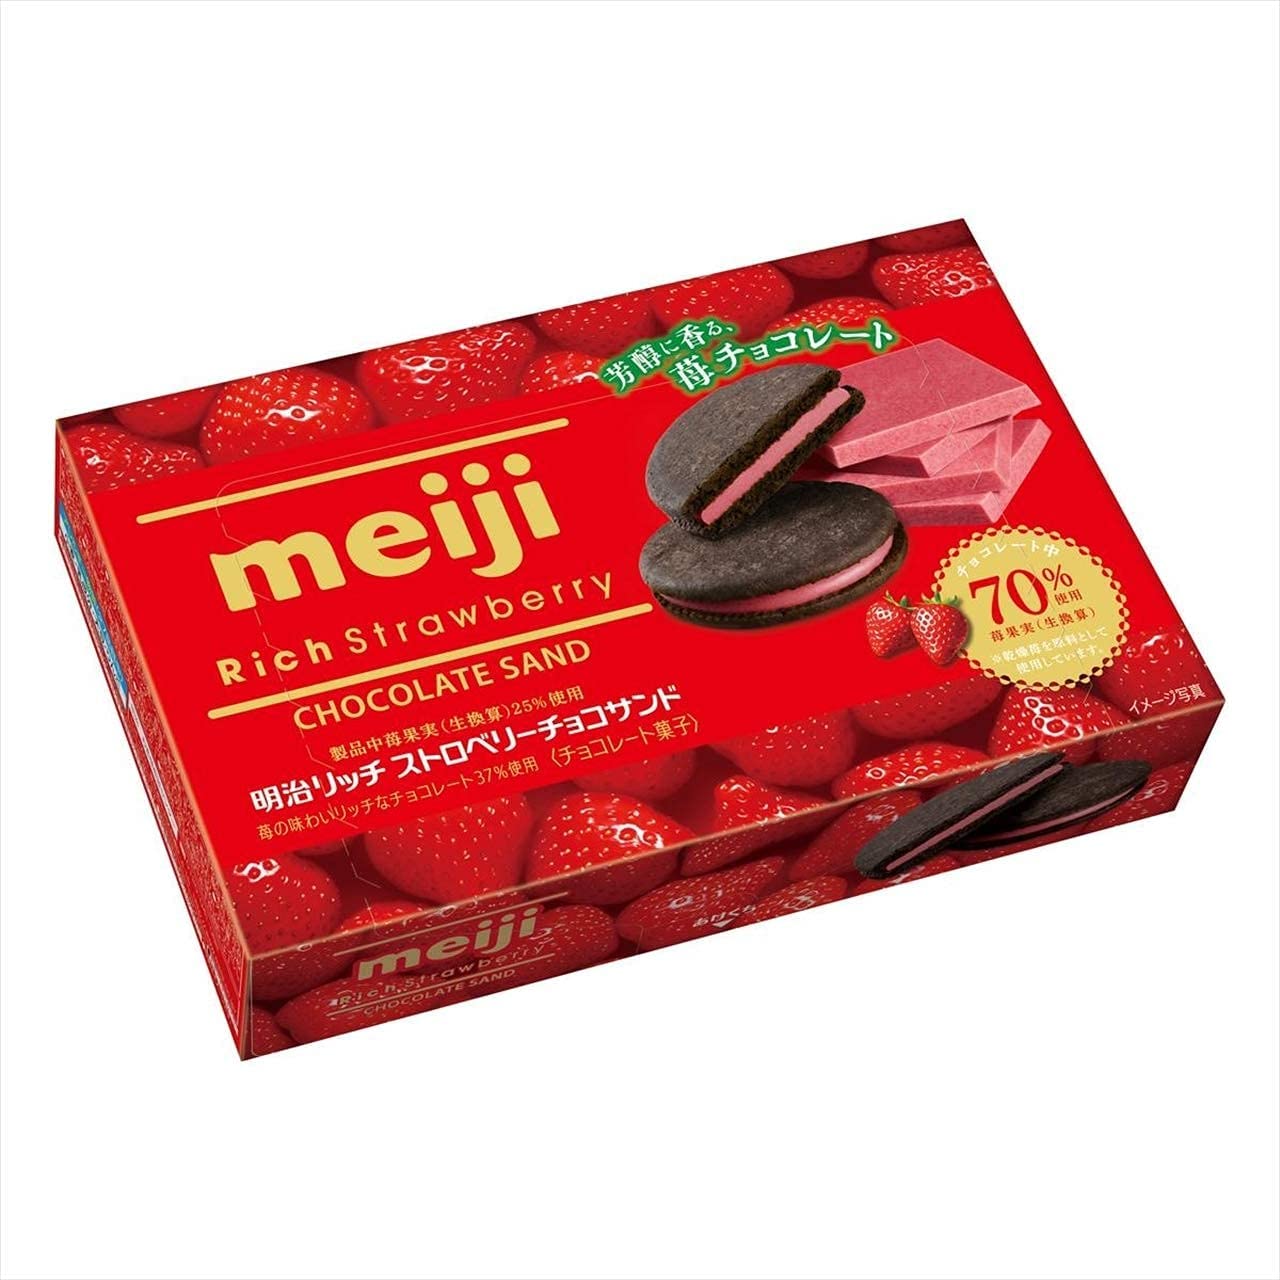 Meiji Rich Chocolate Chocolate Sand Strawberry Sandwich Biscuits (Pack of 5), Japanese Taste